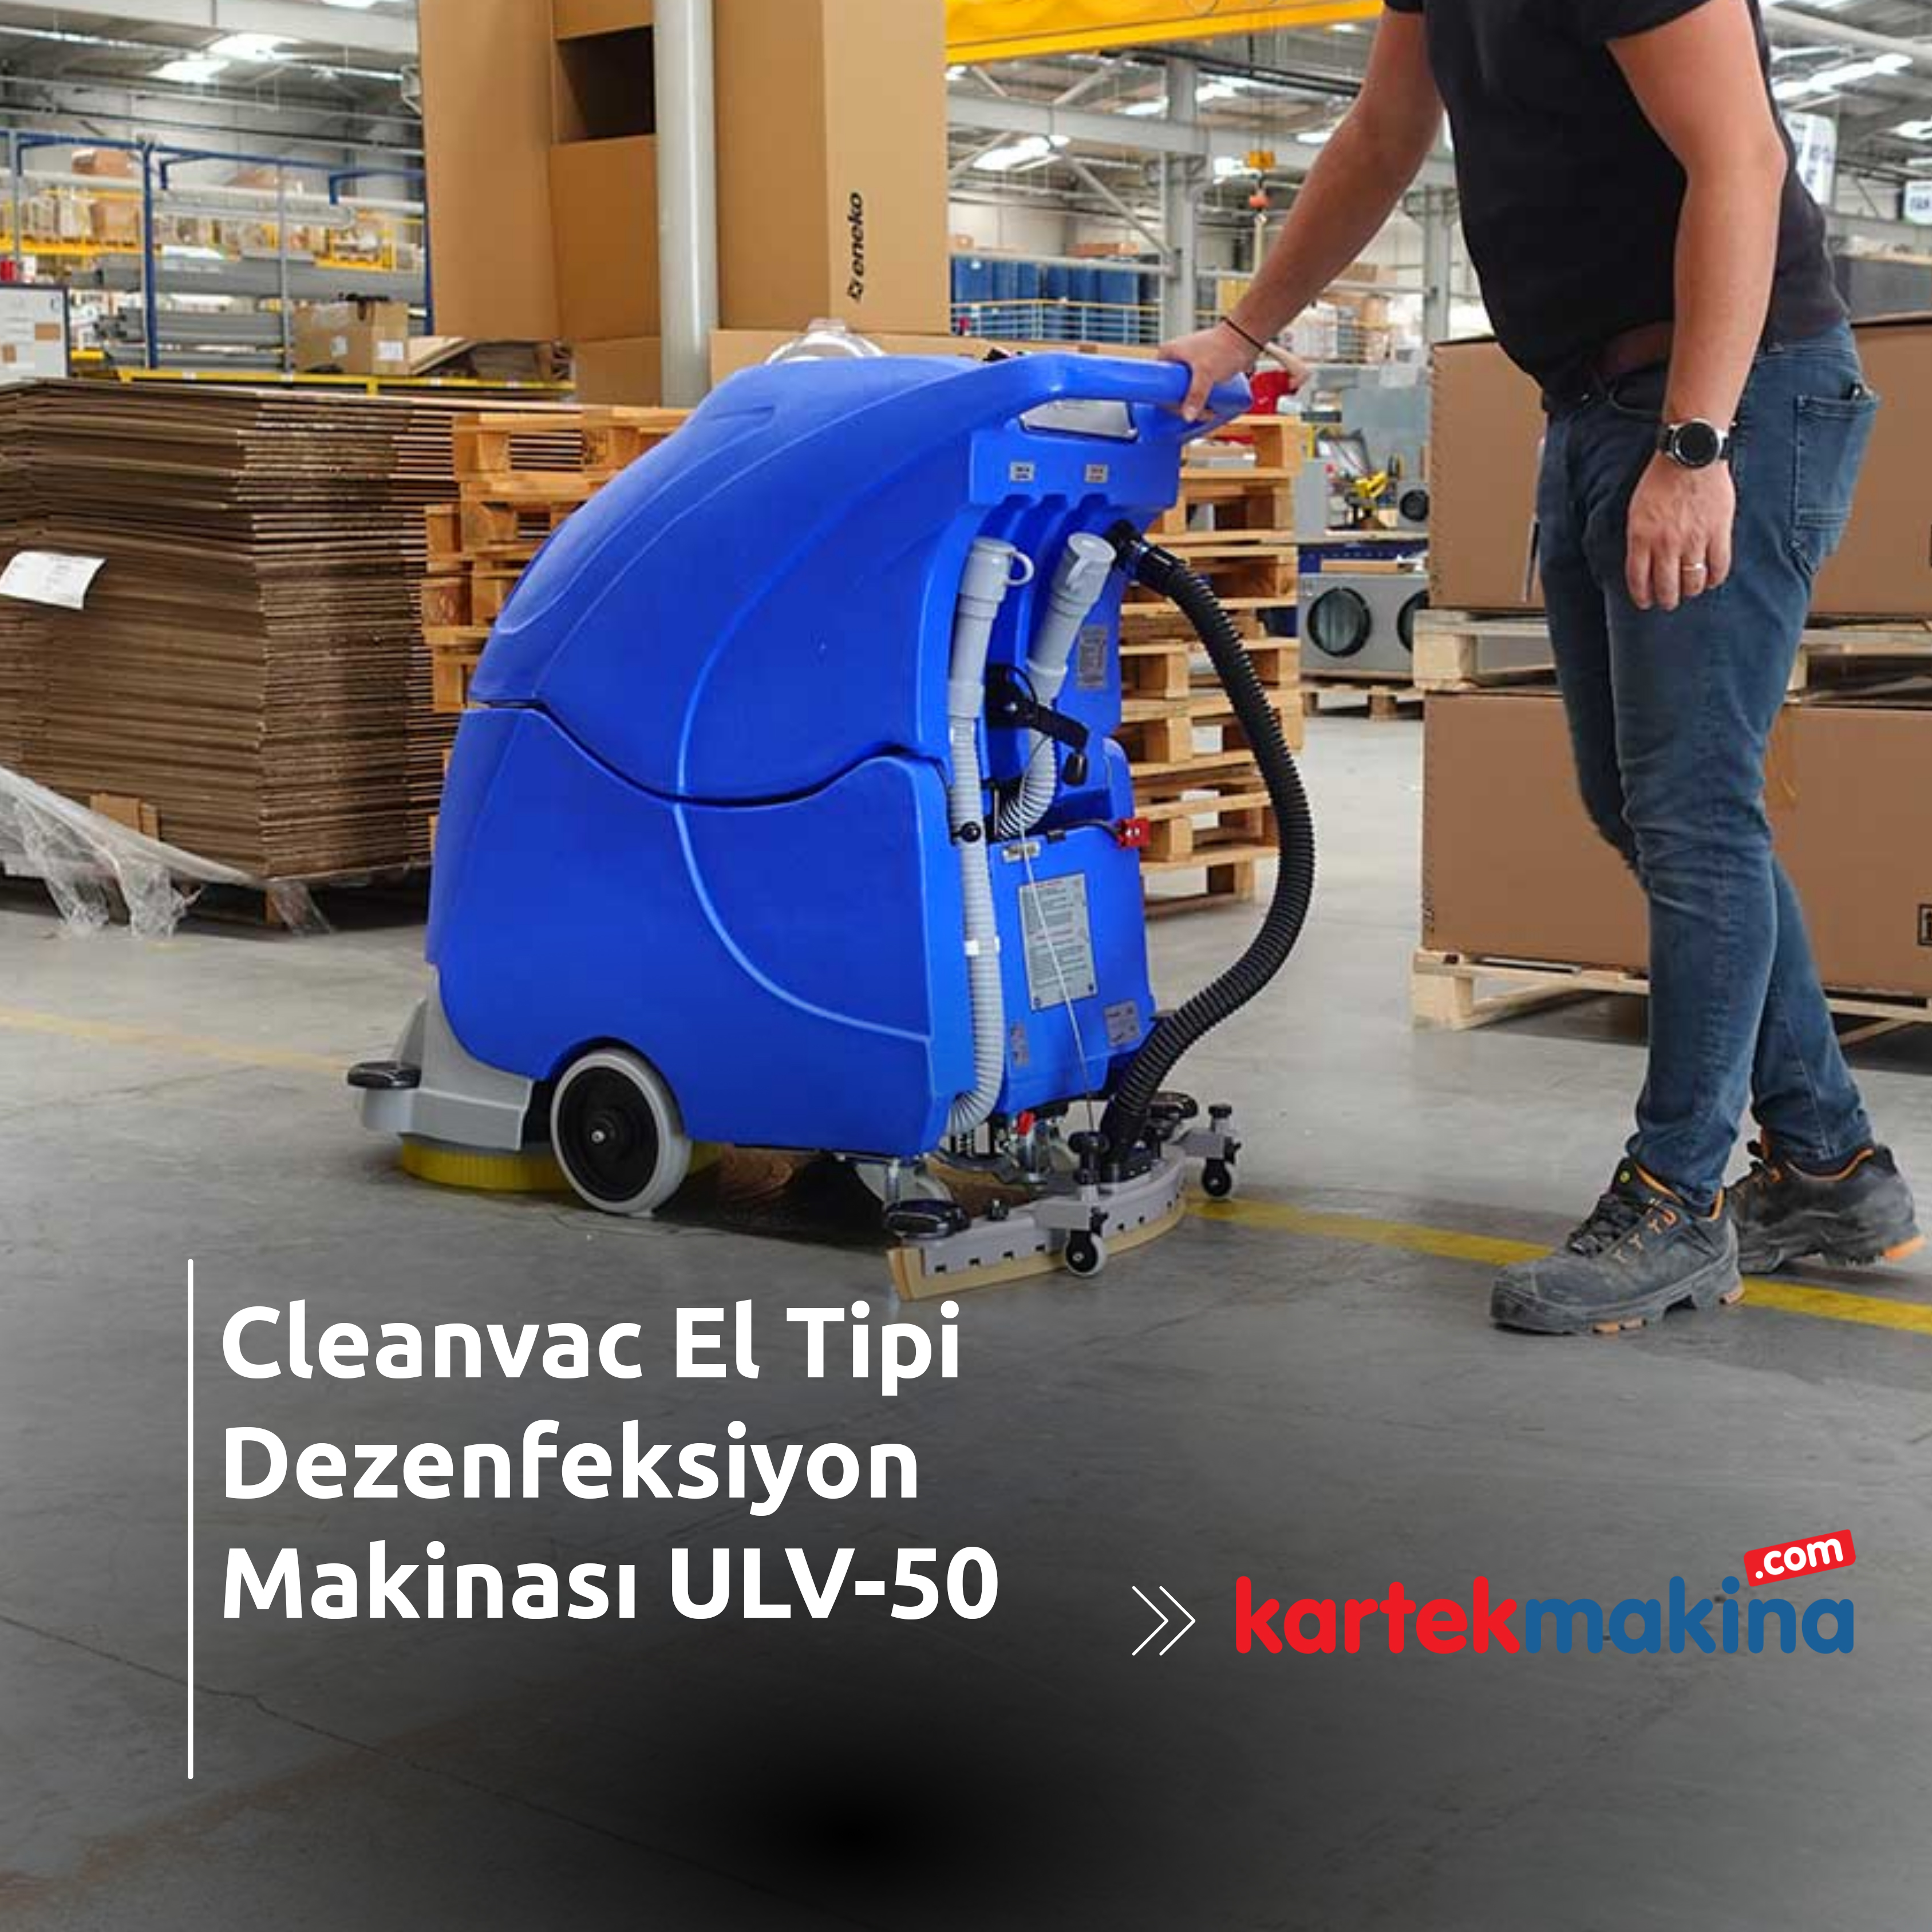 Cleanvac El Tipi Dezenfeksiyon Makinası ULV-50 - Cleanvac El Tipi Dezenfeksiyon Makinası ULV-50